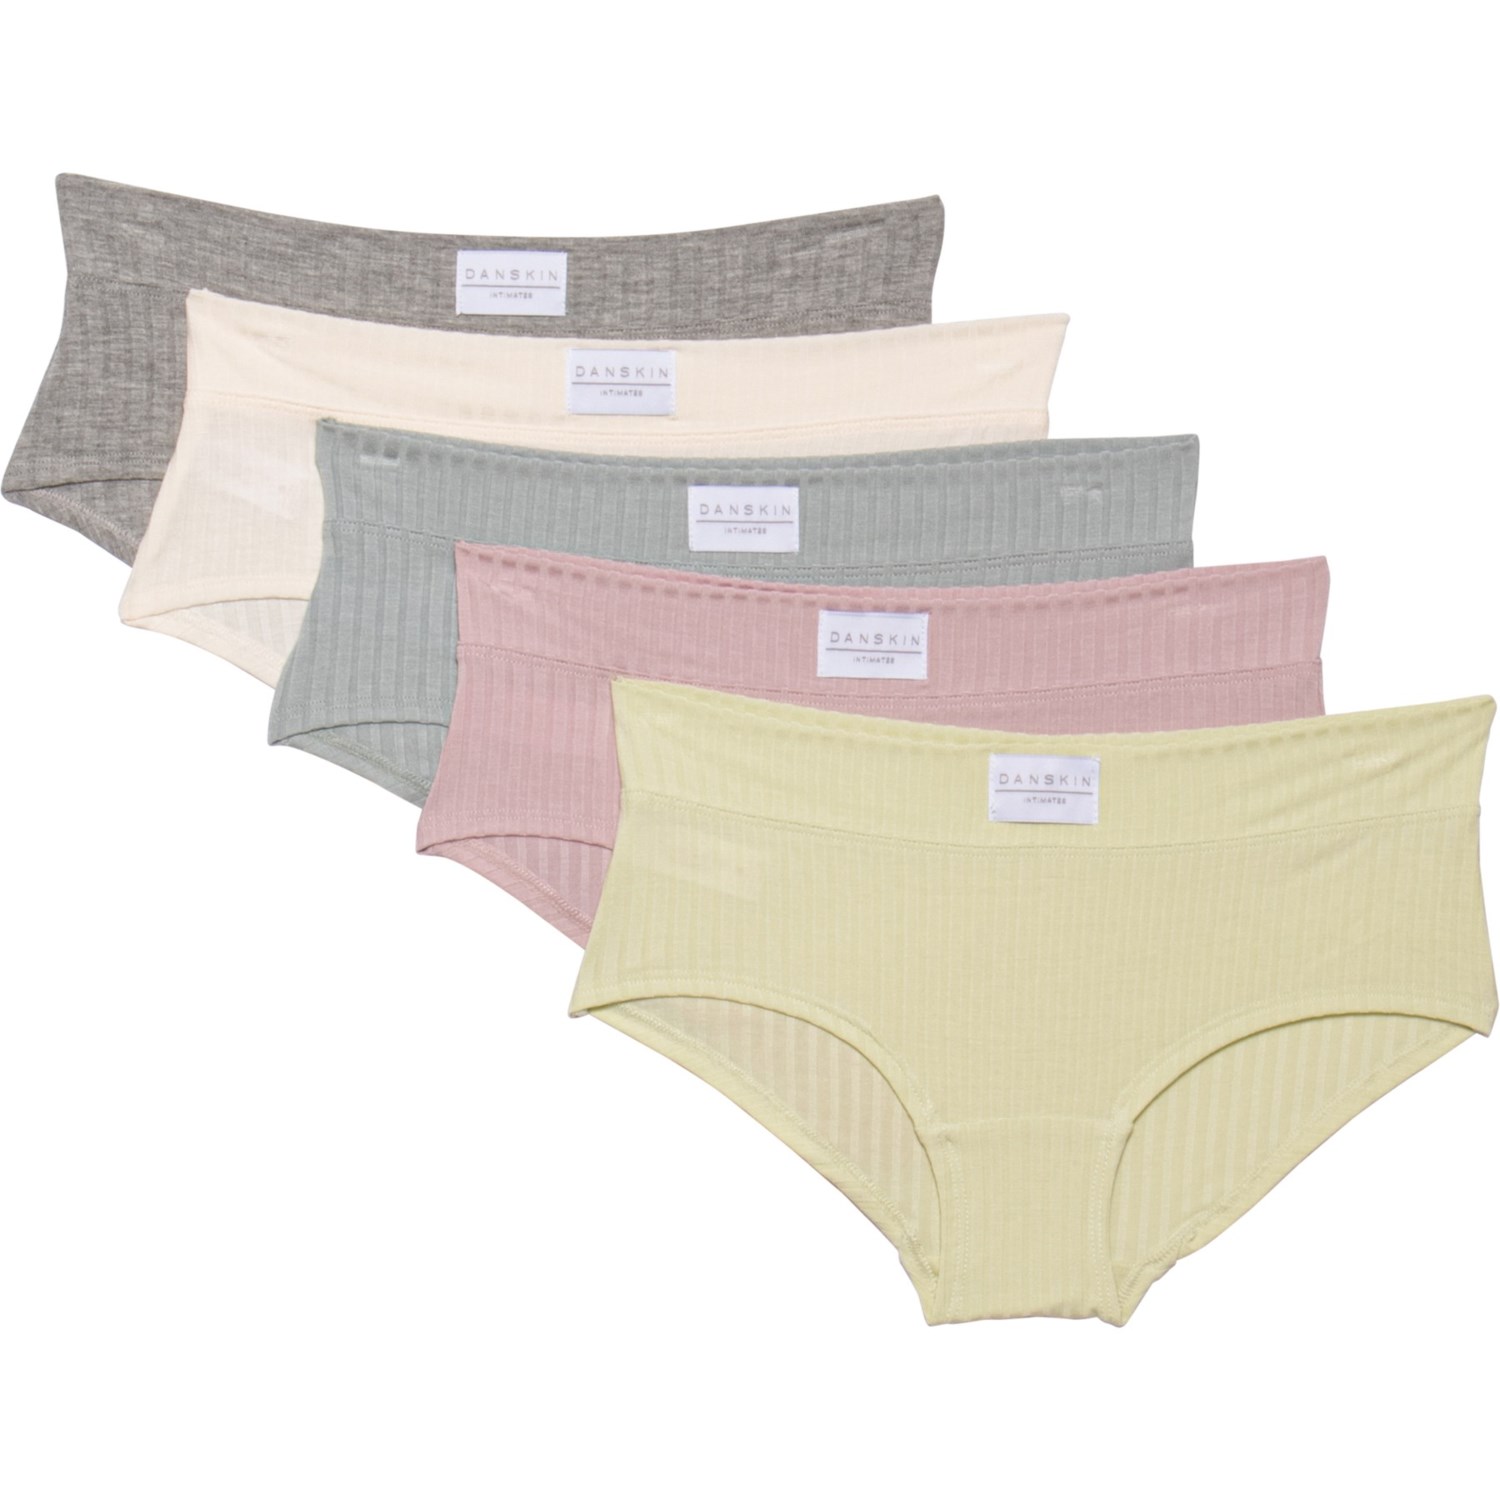 Danskin Ribbed Jacquard Panties (For Women) - Save 64%